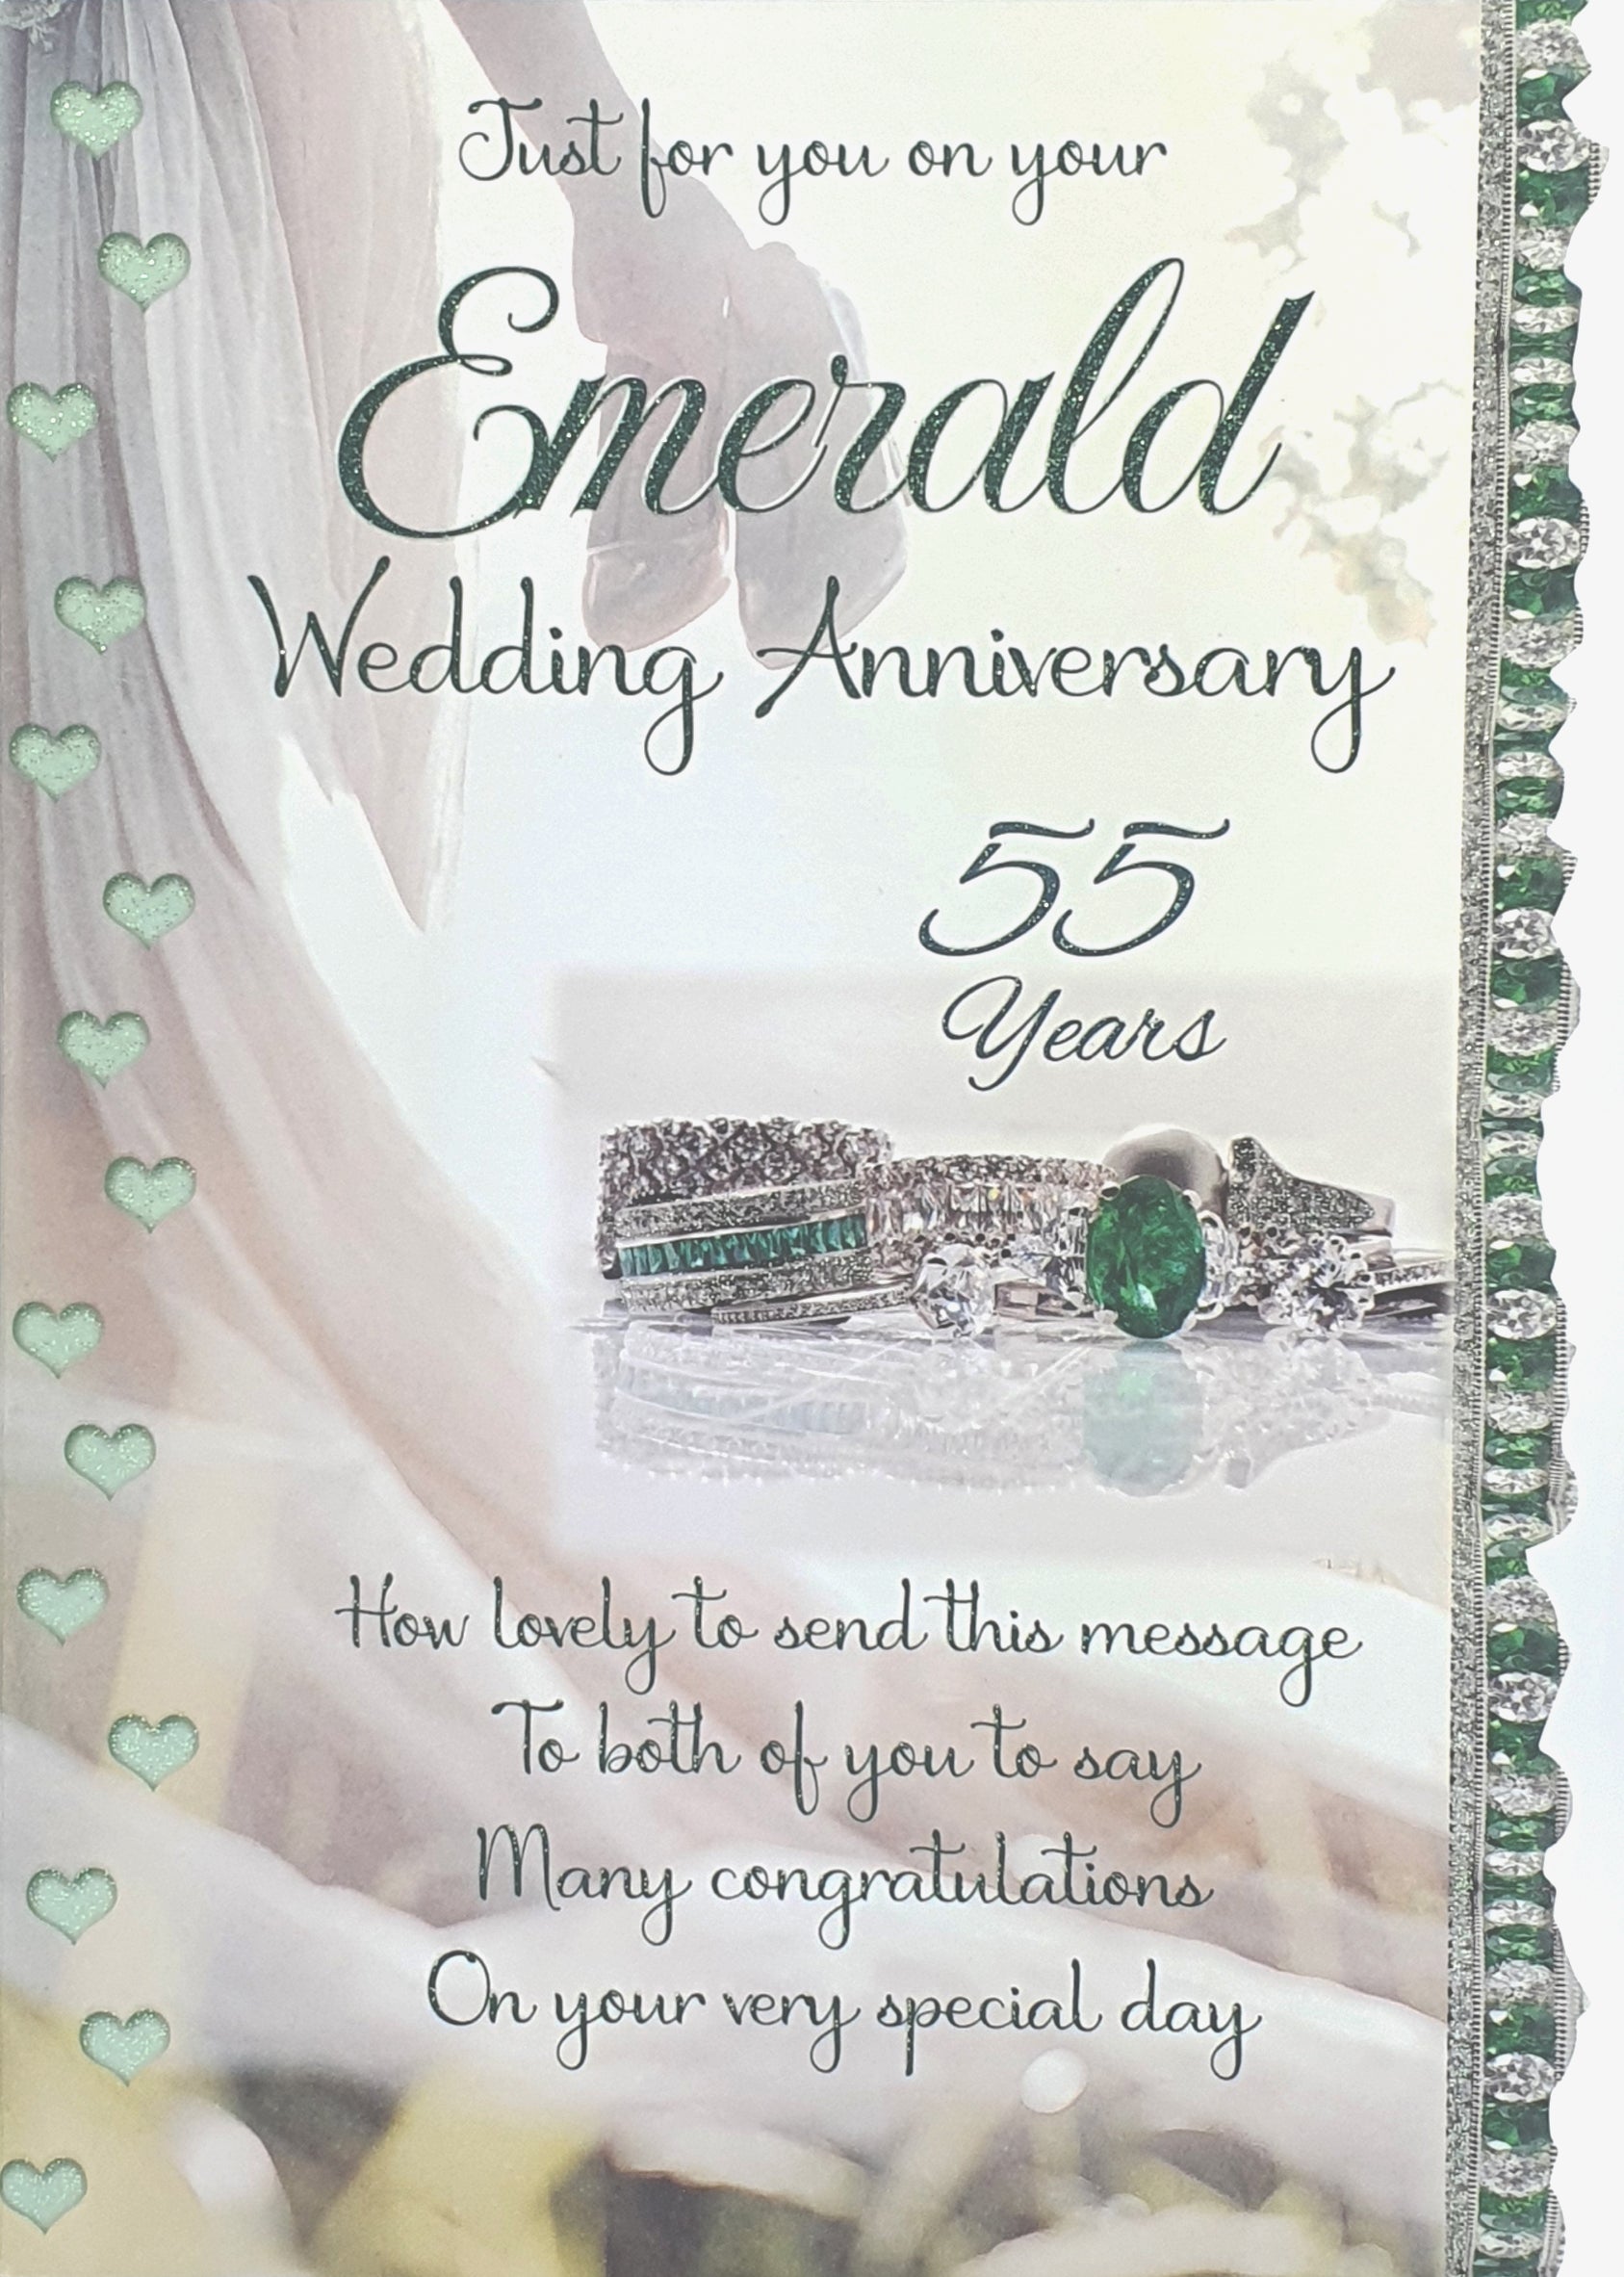 55th Wedding Anniversary Card - Emerald Ring